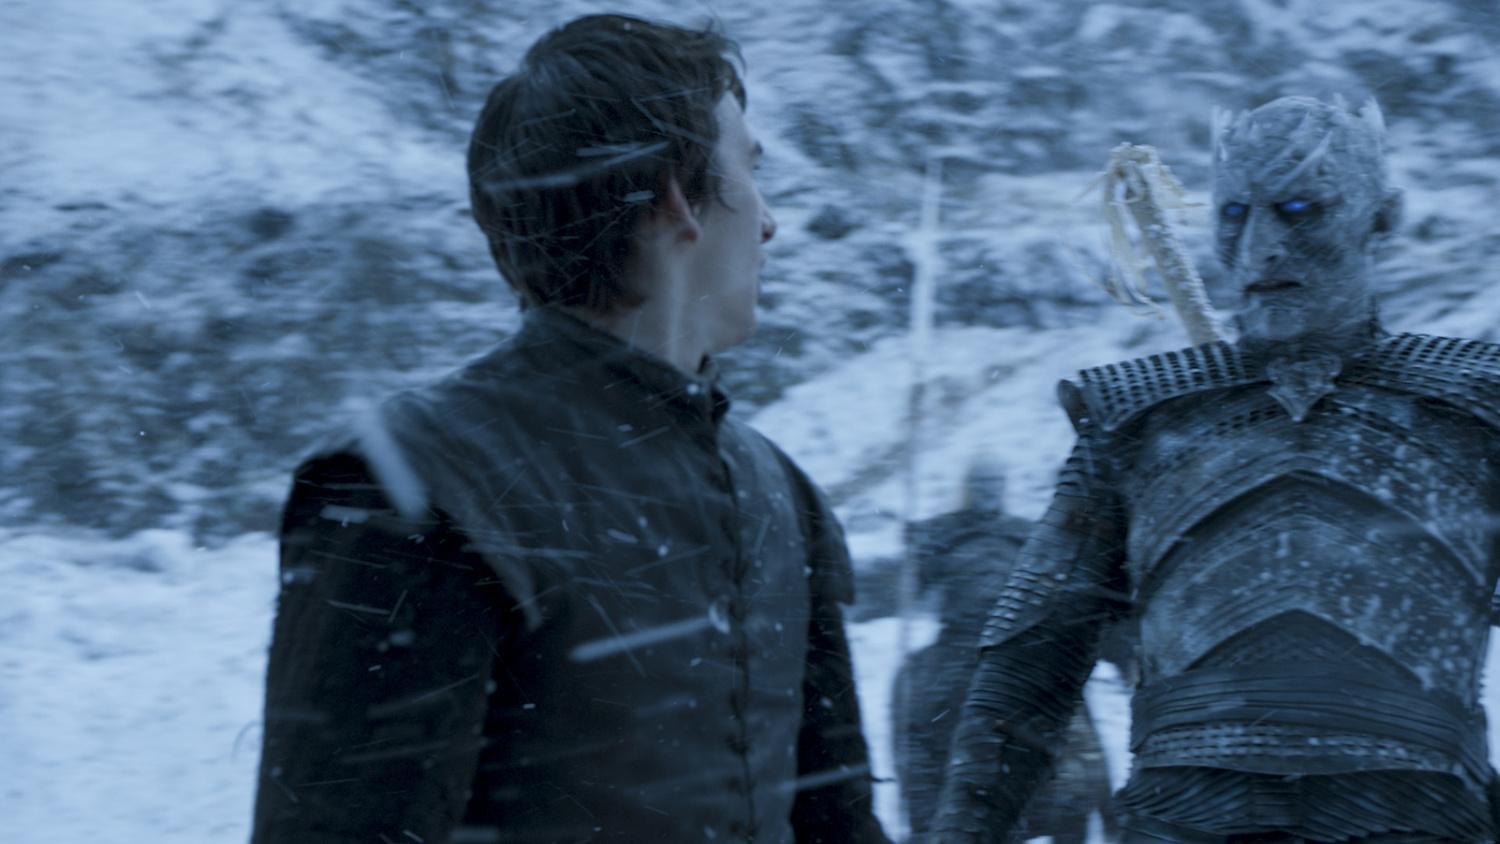 Isaac Hempstead Wright as Bran Stark and Vladimir Furdik as The Night King. Credit: Courtesy HBO